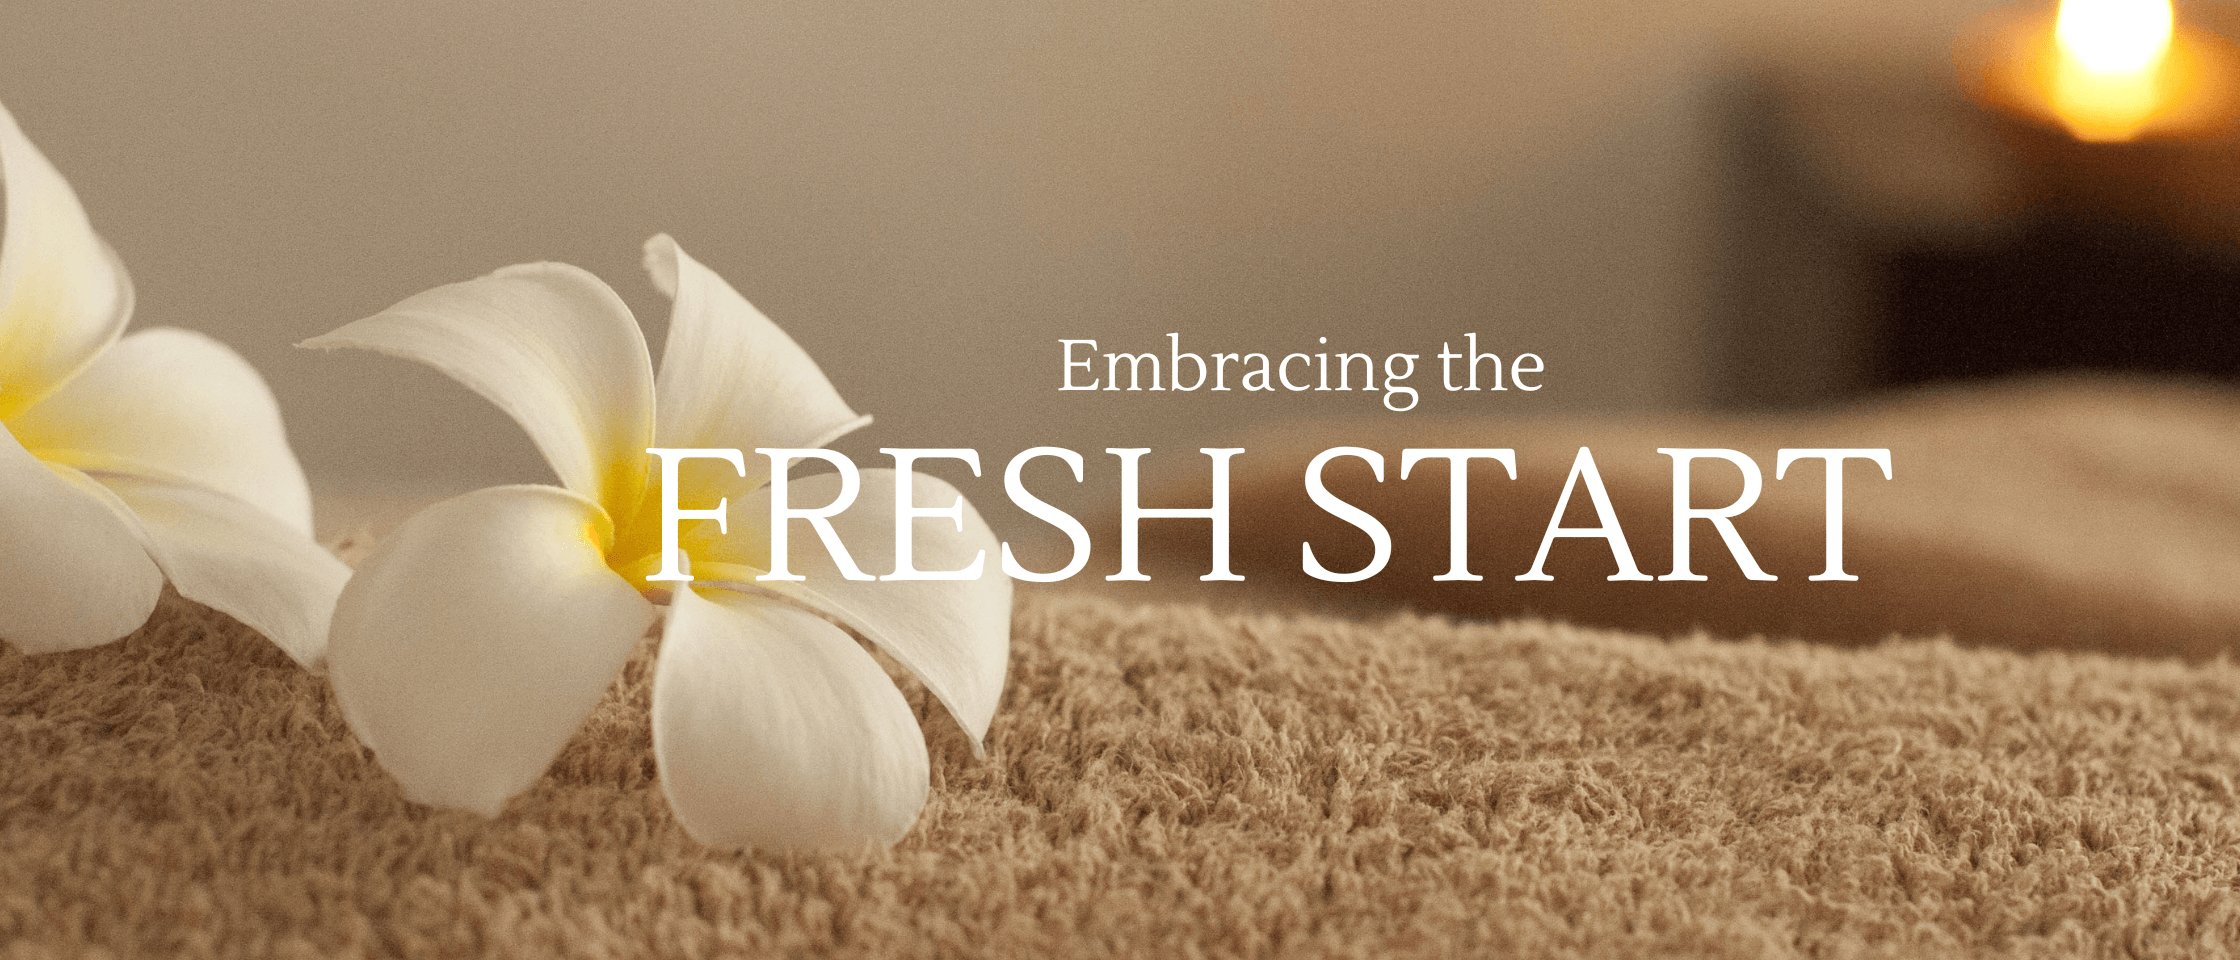 Embracing the Fresh Start